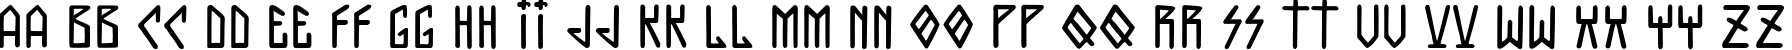 Пример написания английского алфавита шрифтом Galaktika